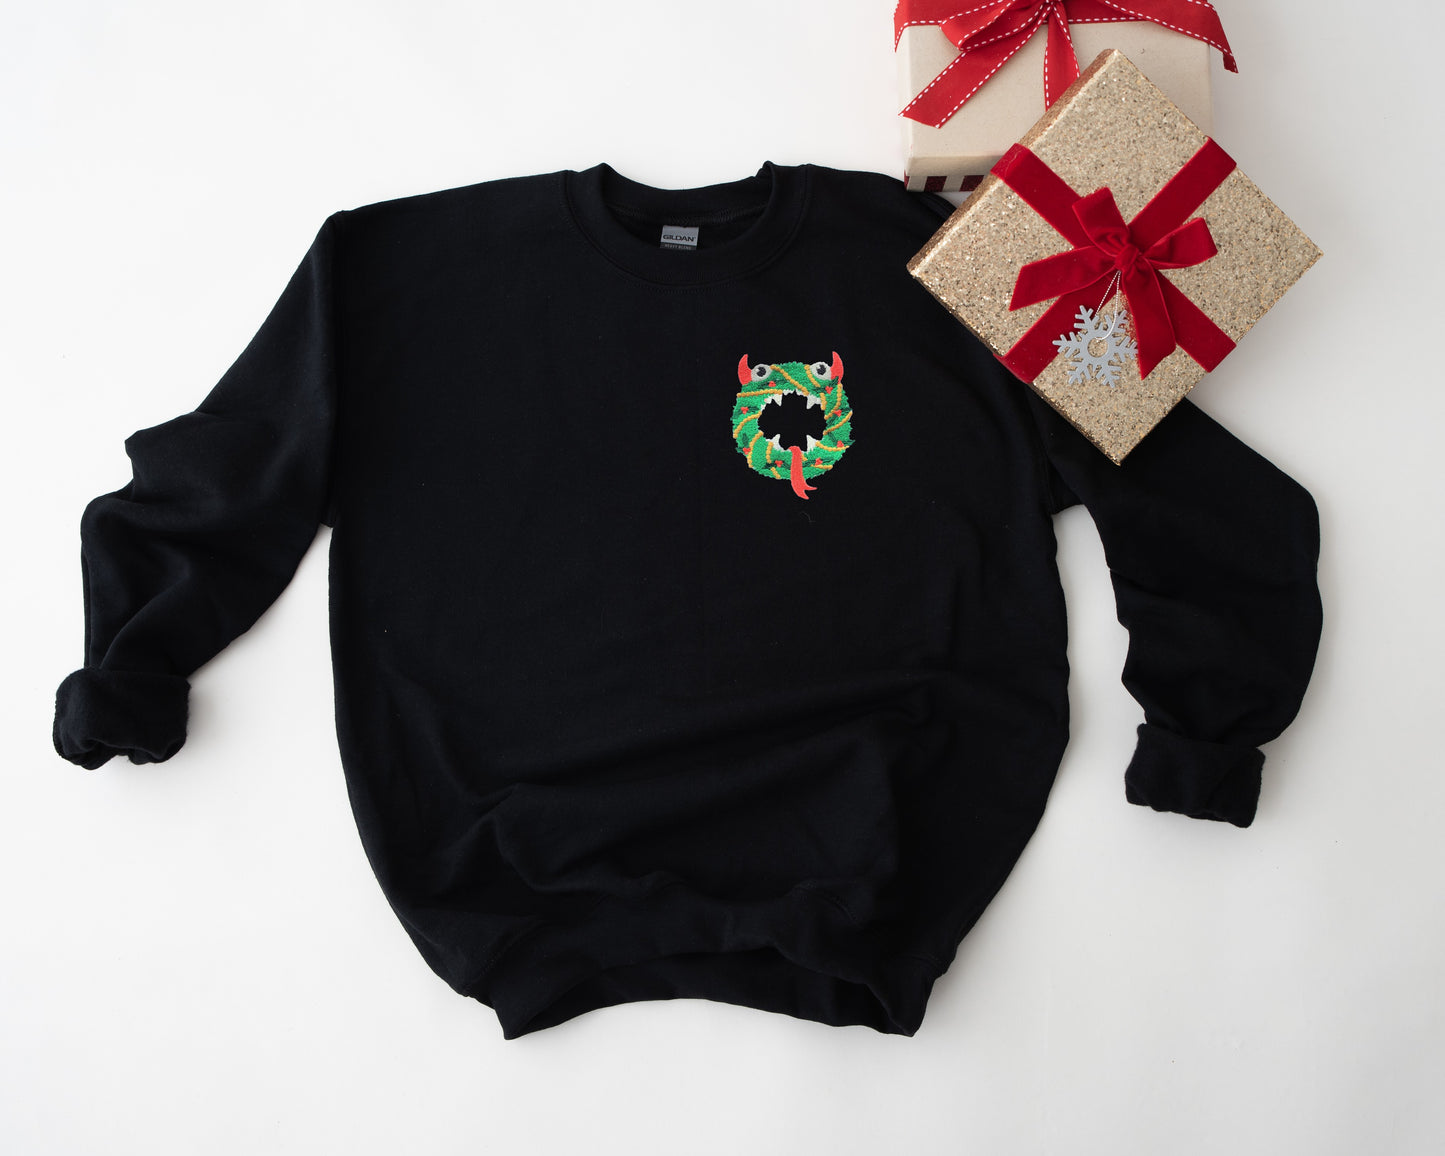 Monster Christmas Wreath Embroidered Adult Unisex Crewneck Sweatshirt